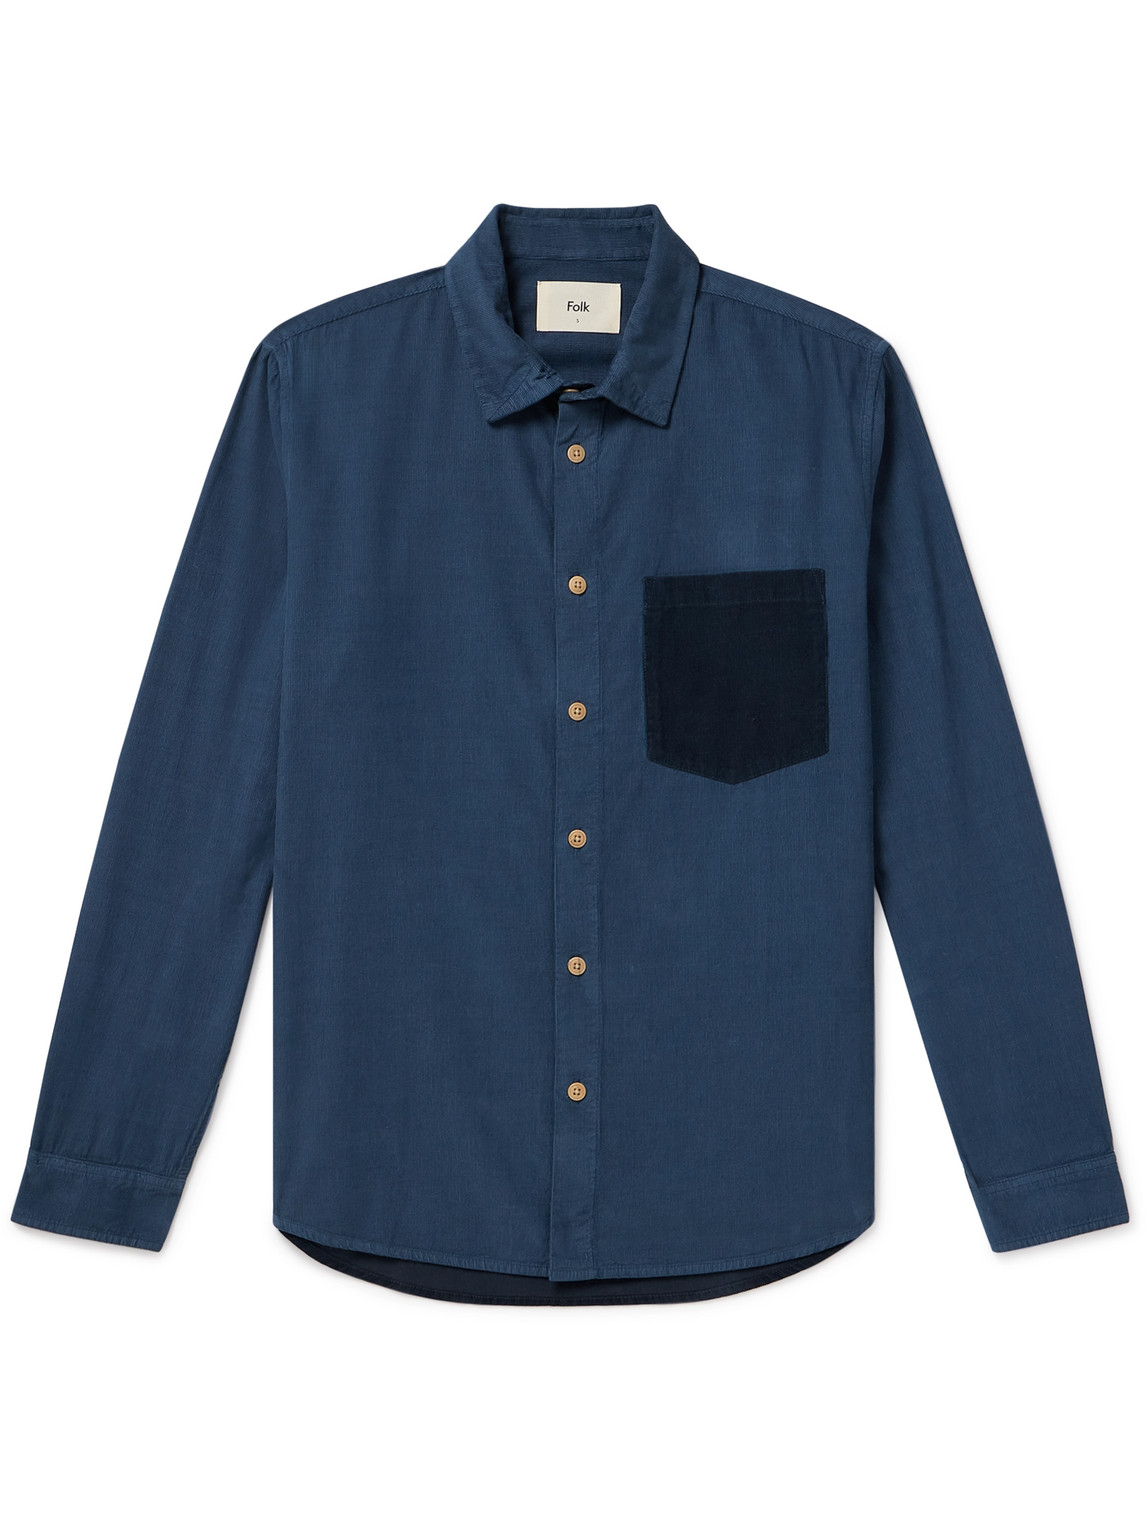 Folk Two-tone Cotton-corduroy Shirt In Blue